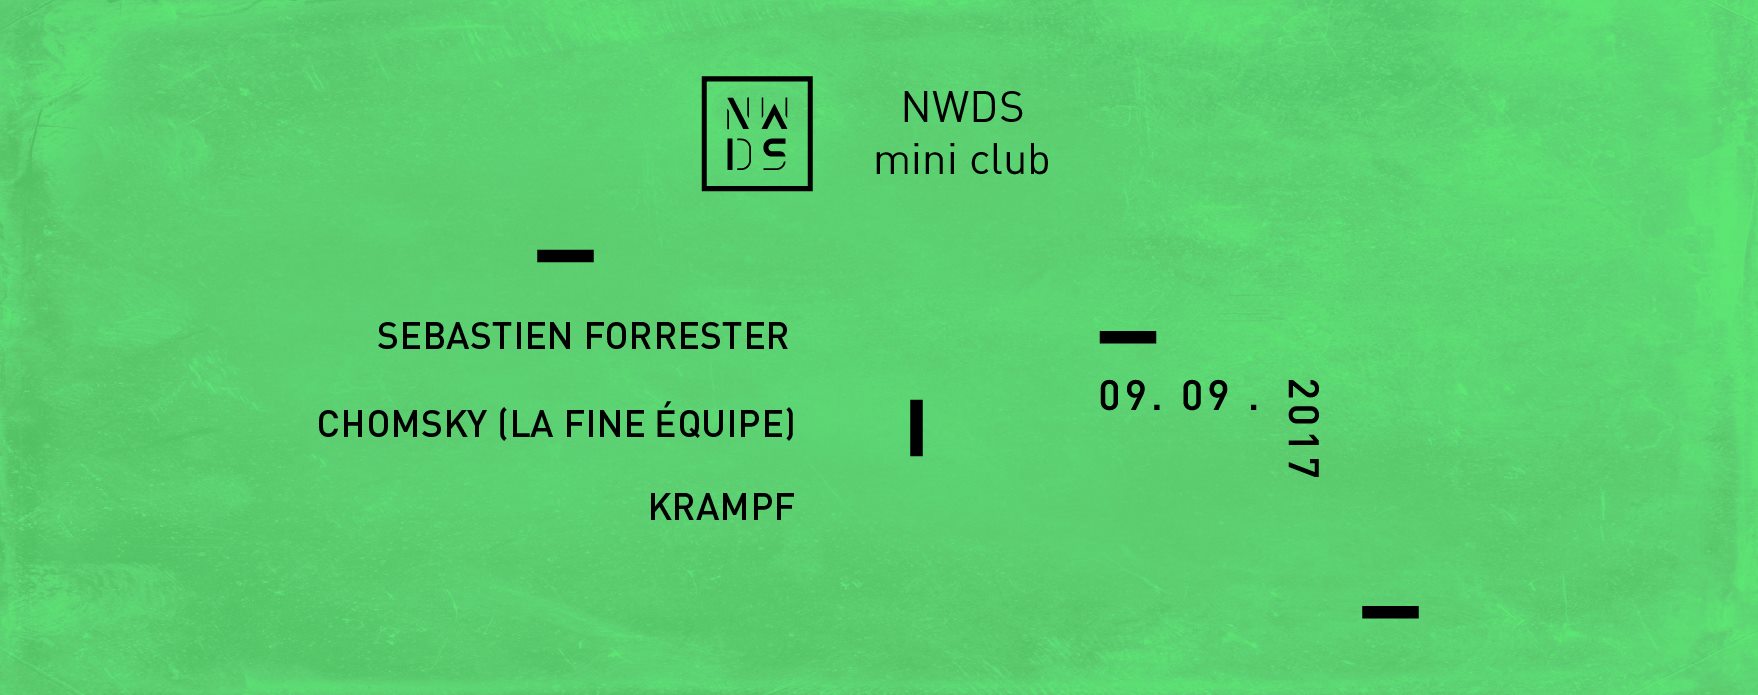 NWDS Mini Club